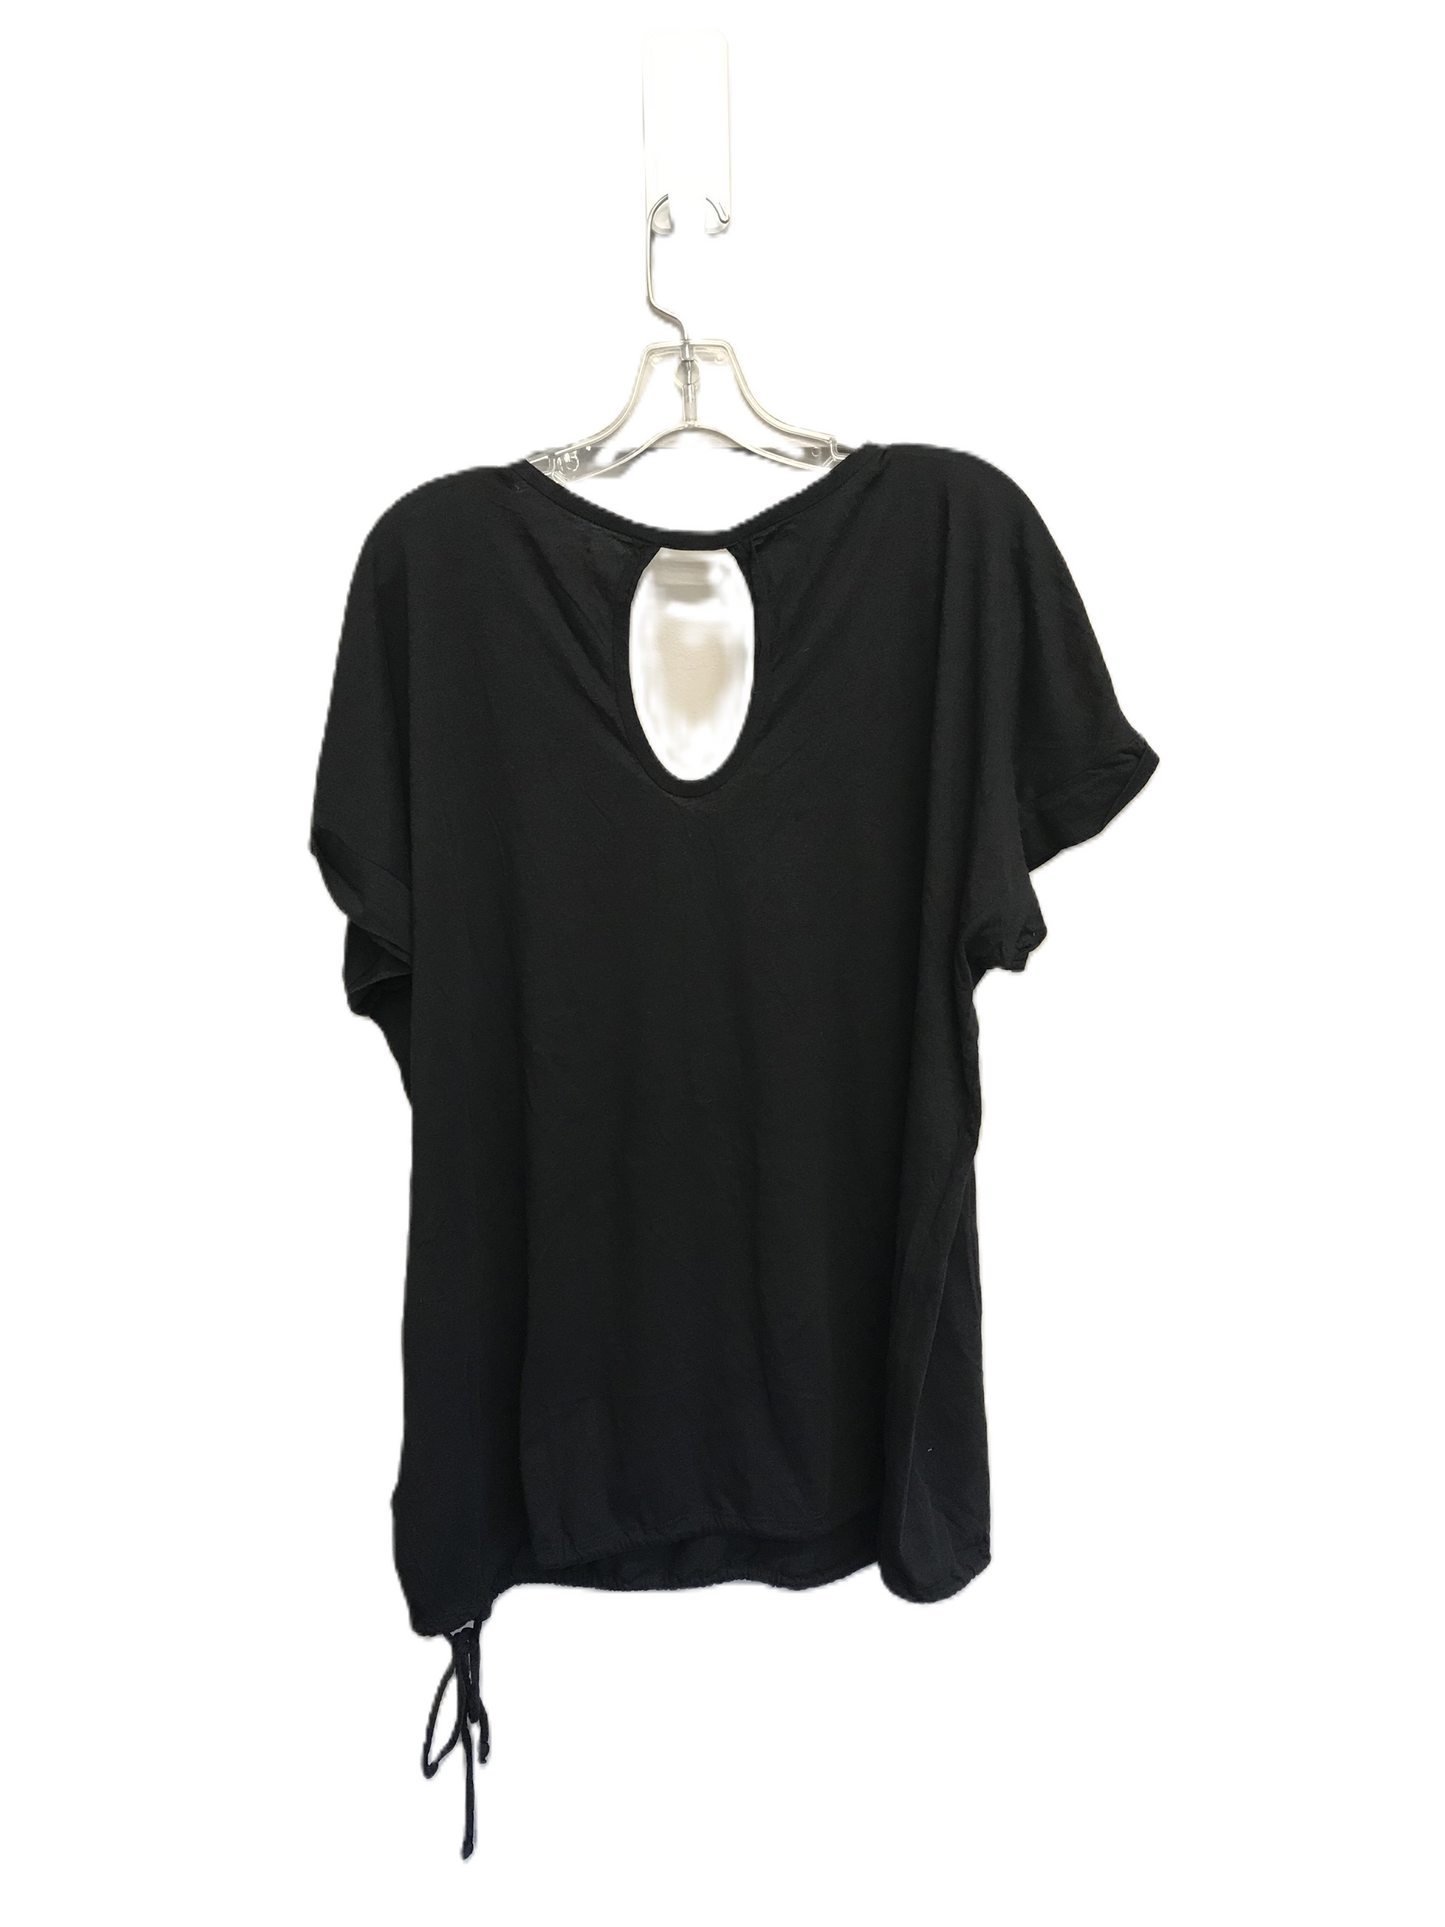 Black Top Short Sleeve By Dkny, Size: 4x